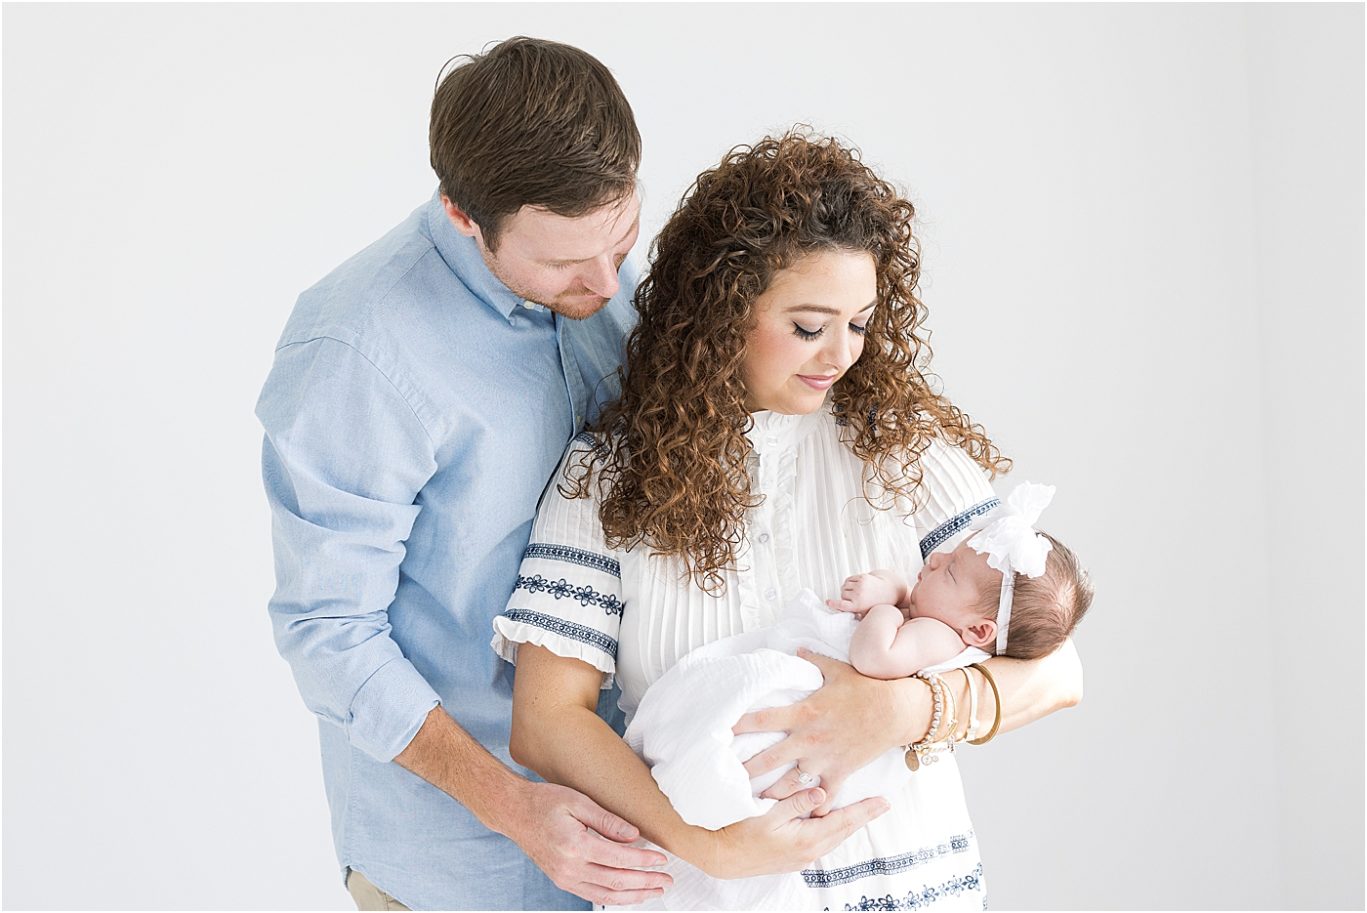 Studio newborn photos of baby girl | Lindsay Konopa Photography